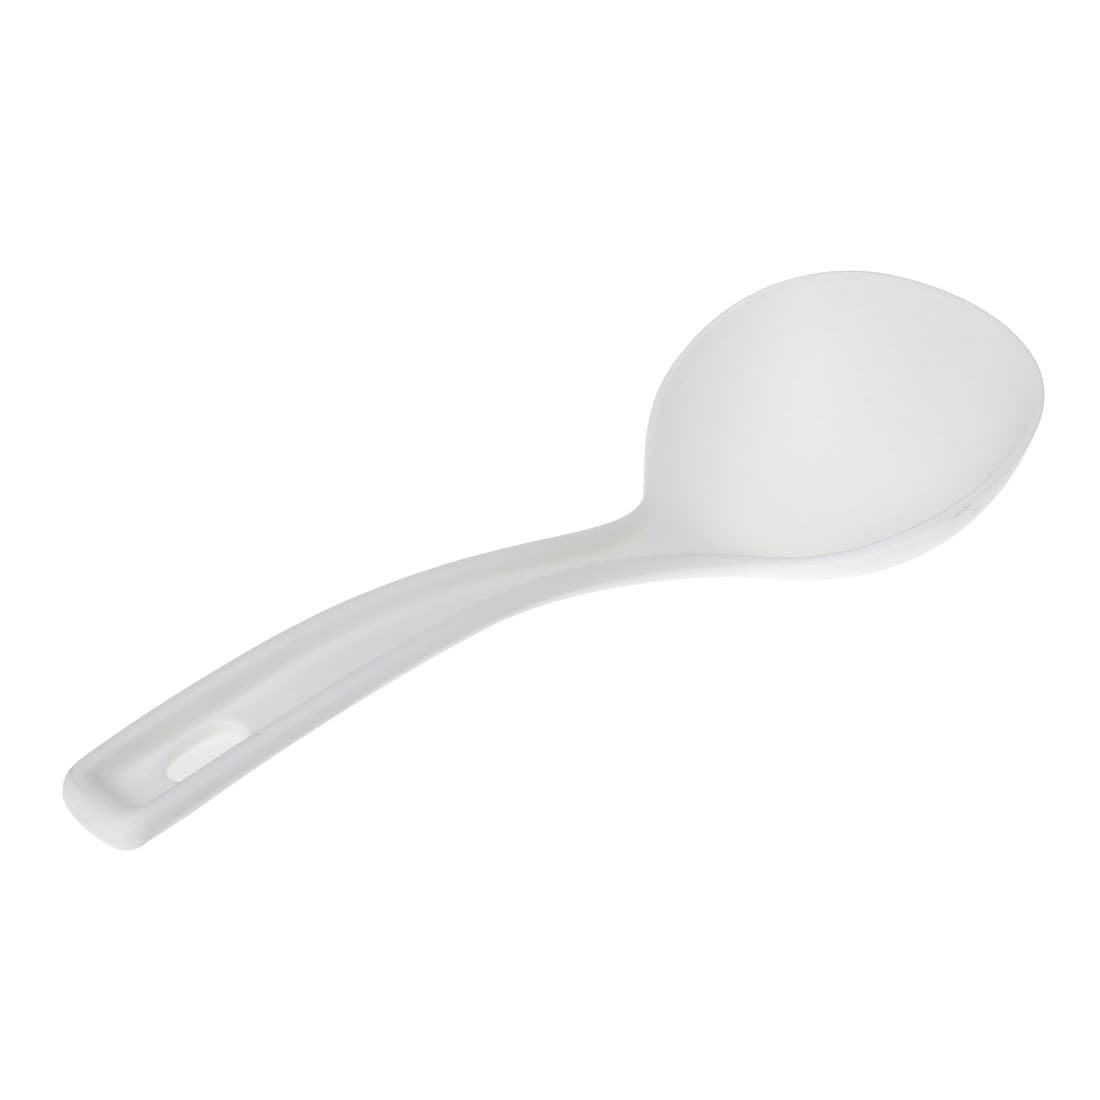 https://ak1.ostkcdn.com/images/products/is/images/direct/daacac93c1eb75da579bf177c086fb6865e4544f/Home-Kitchen-Plastic-Tableware-Porridge-Soup-Ladle-Spoon-White-19.5cm-Long.jpg